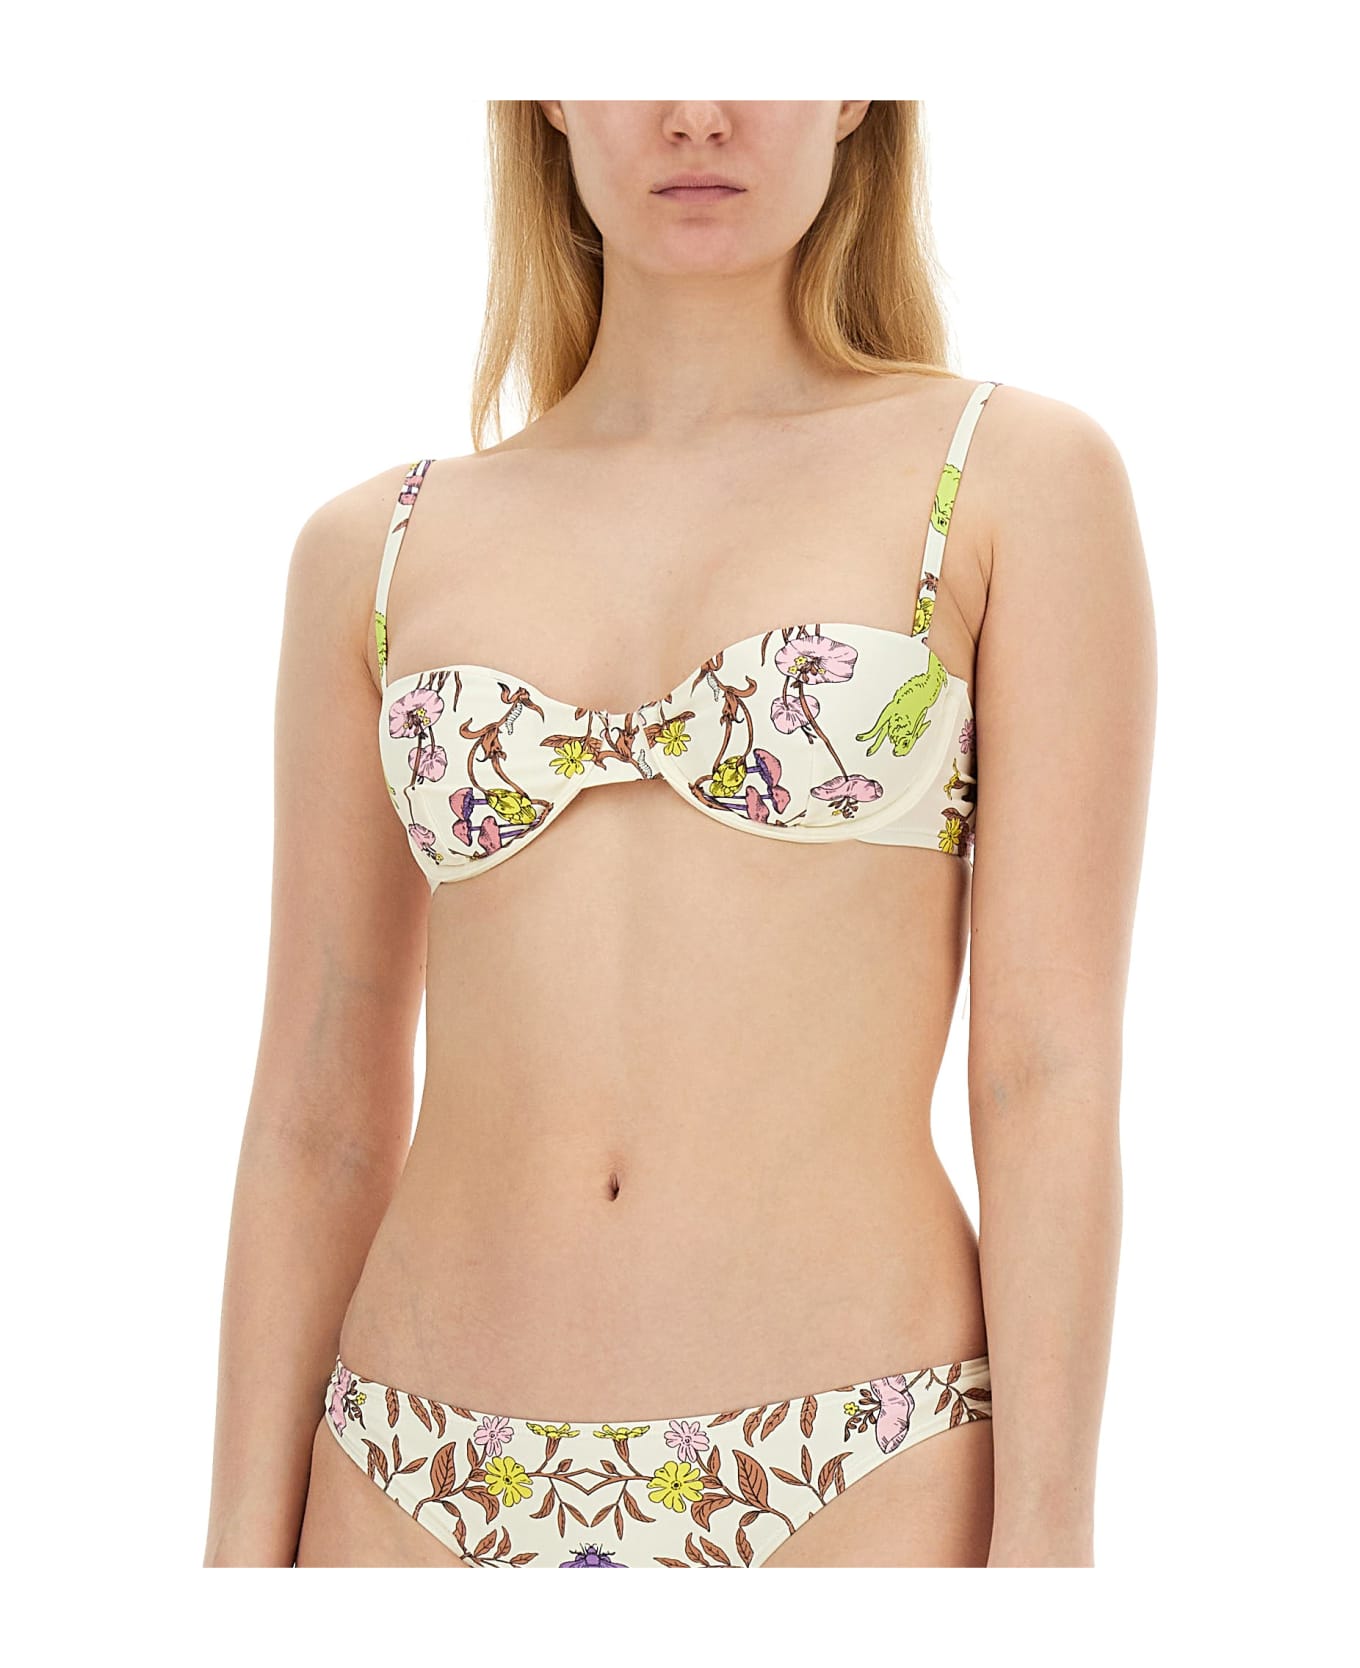 Tory Burch Printed Underwire Bikini Top - Chartreuse Meadow